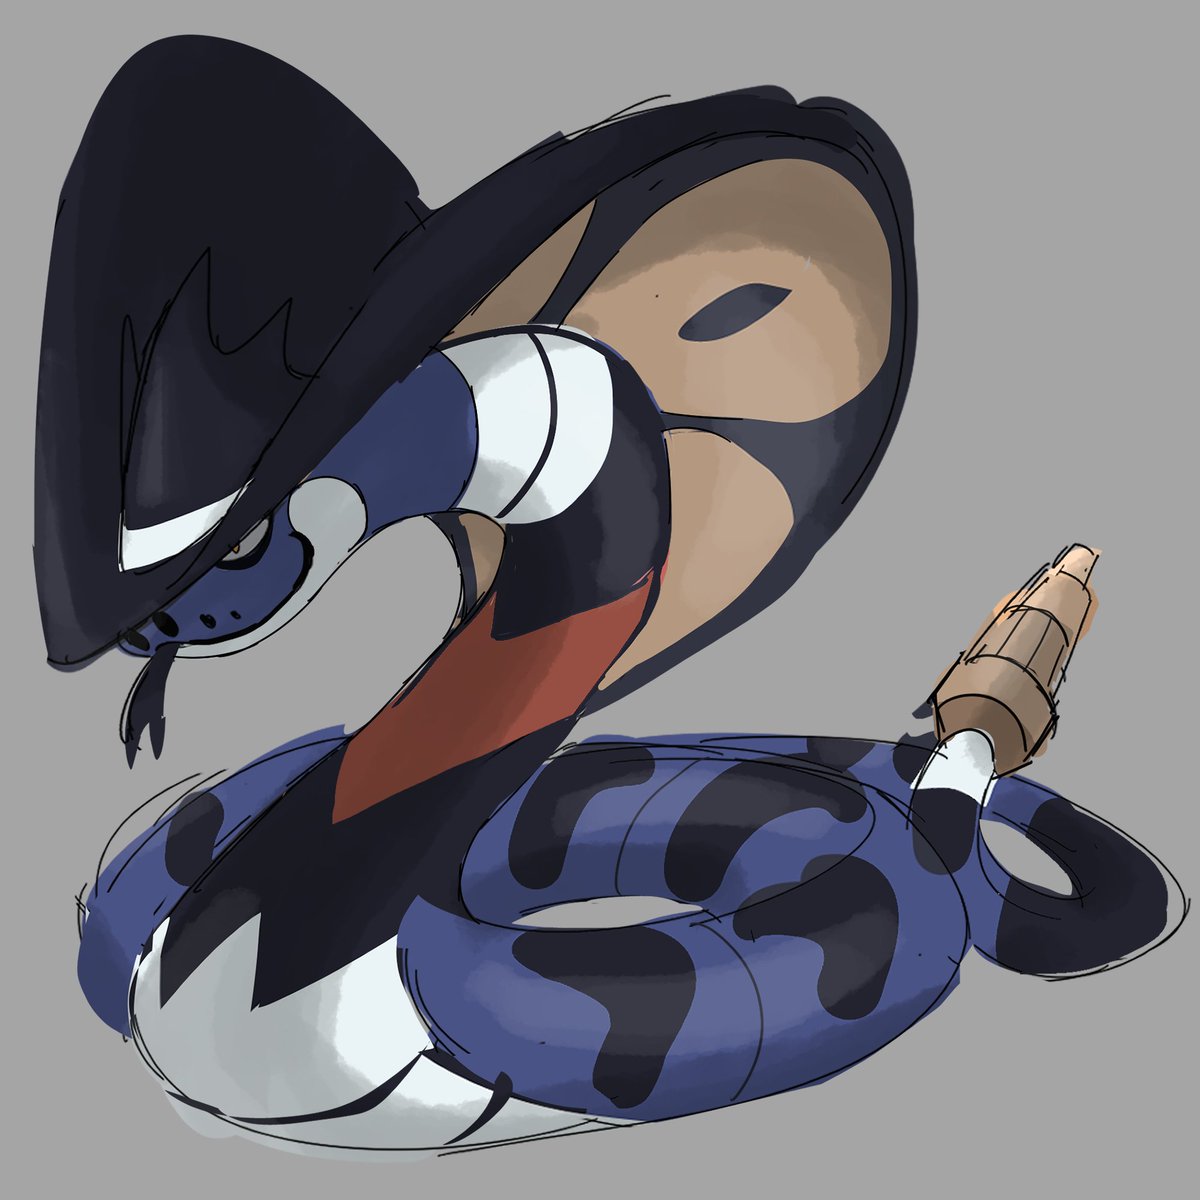 no humans pokemon (creature) solo simple background grey background full body snake  illustration images